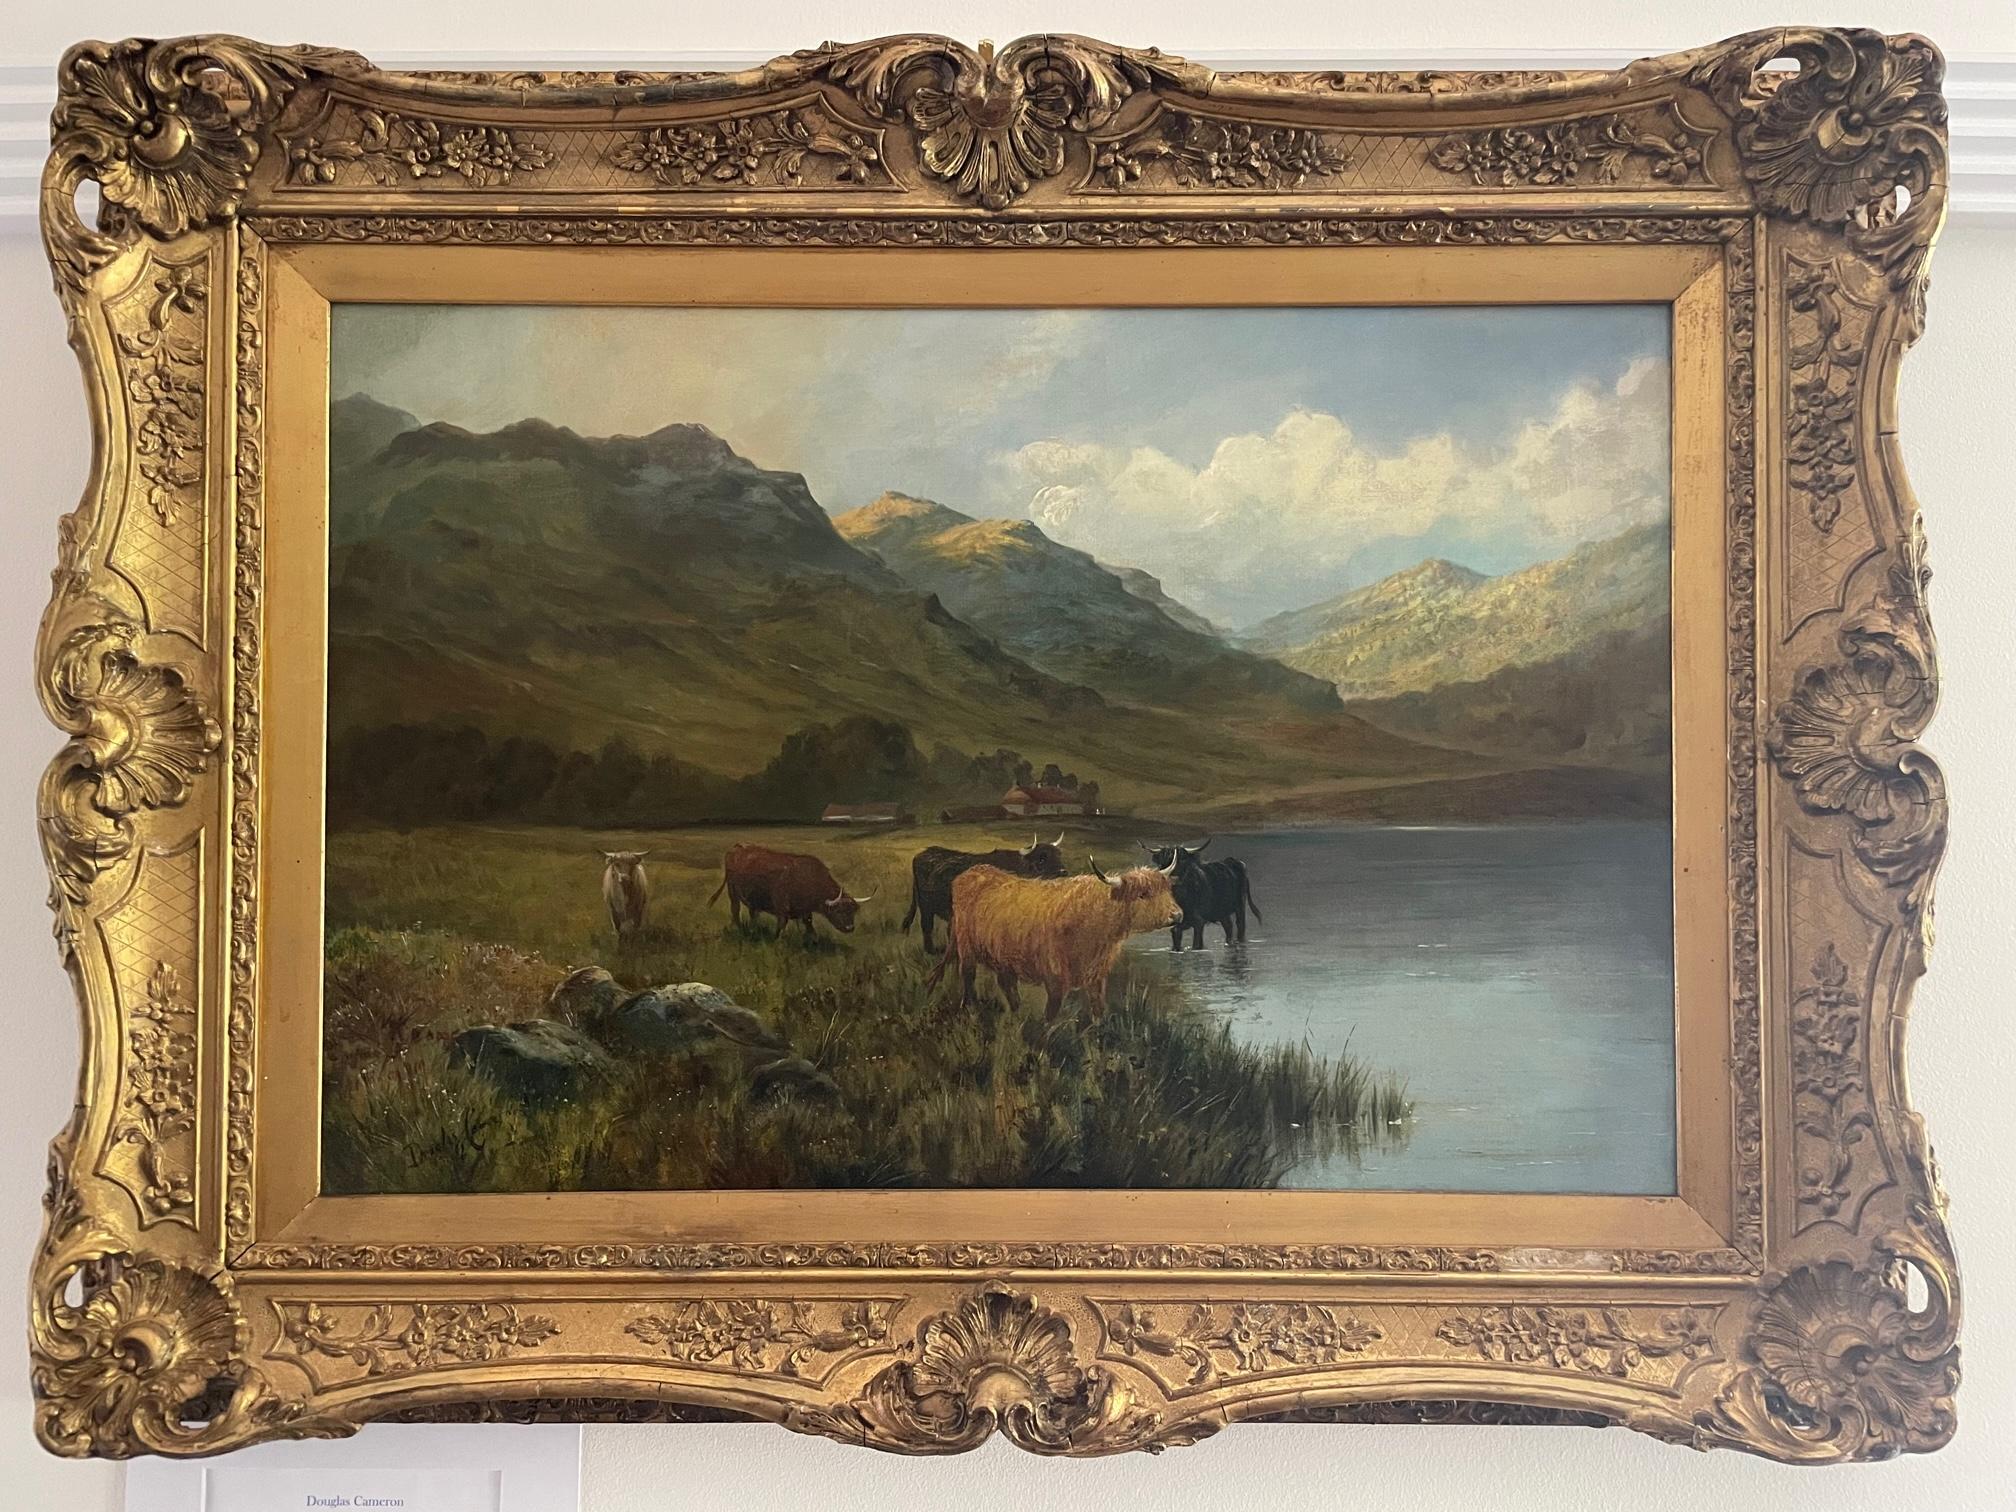 Douglas Cameron Landscape Painting – Highland-Kattle-Wassergeschirr 